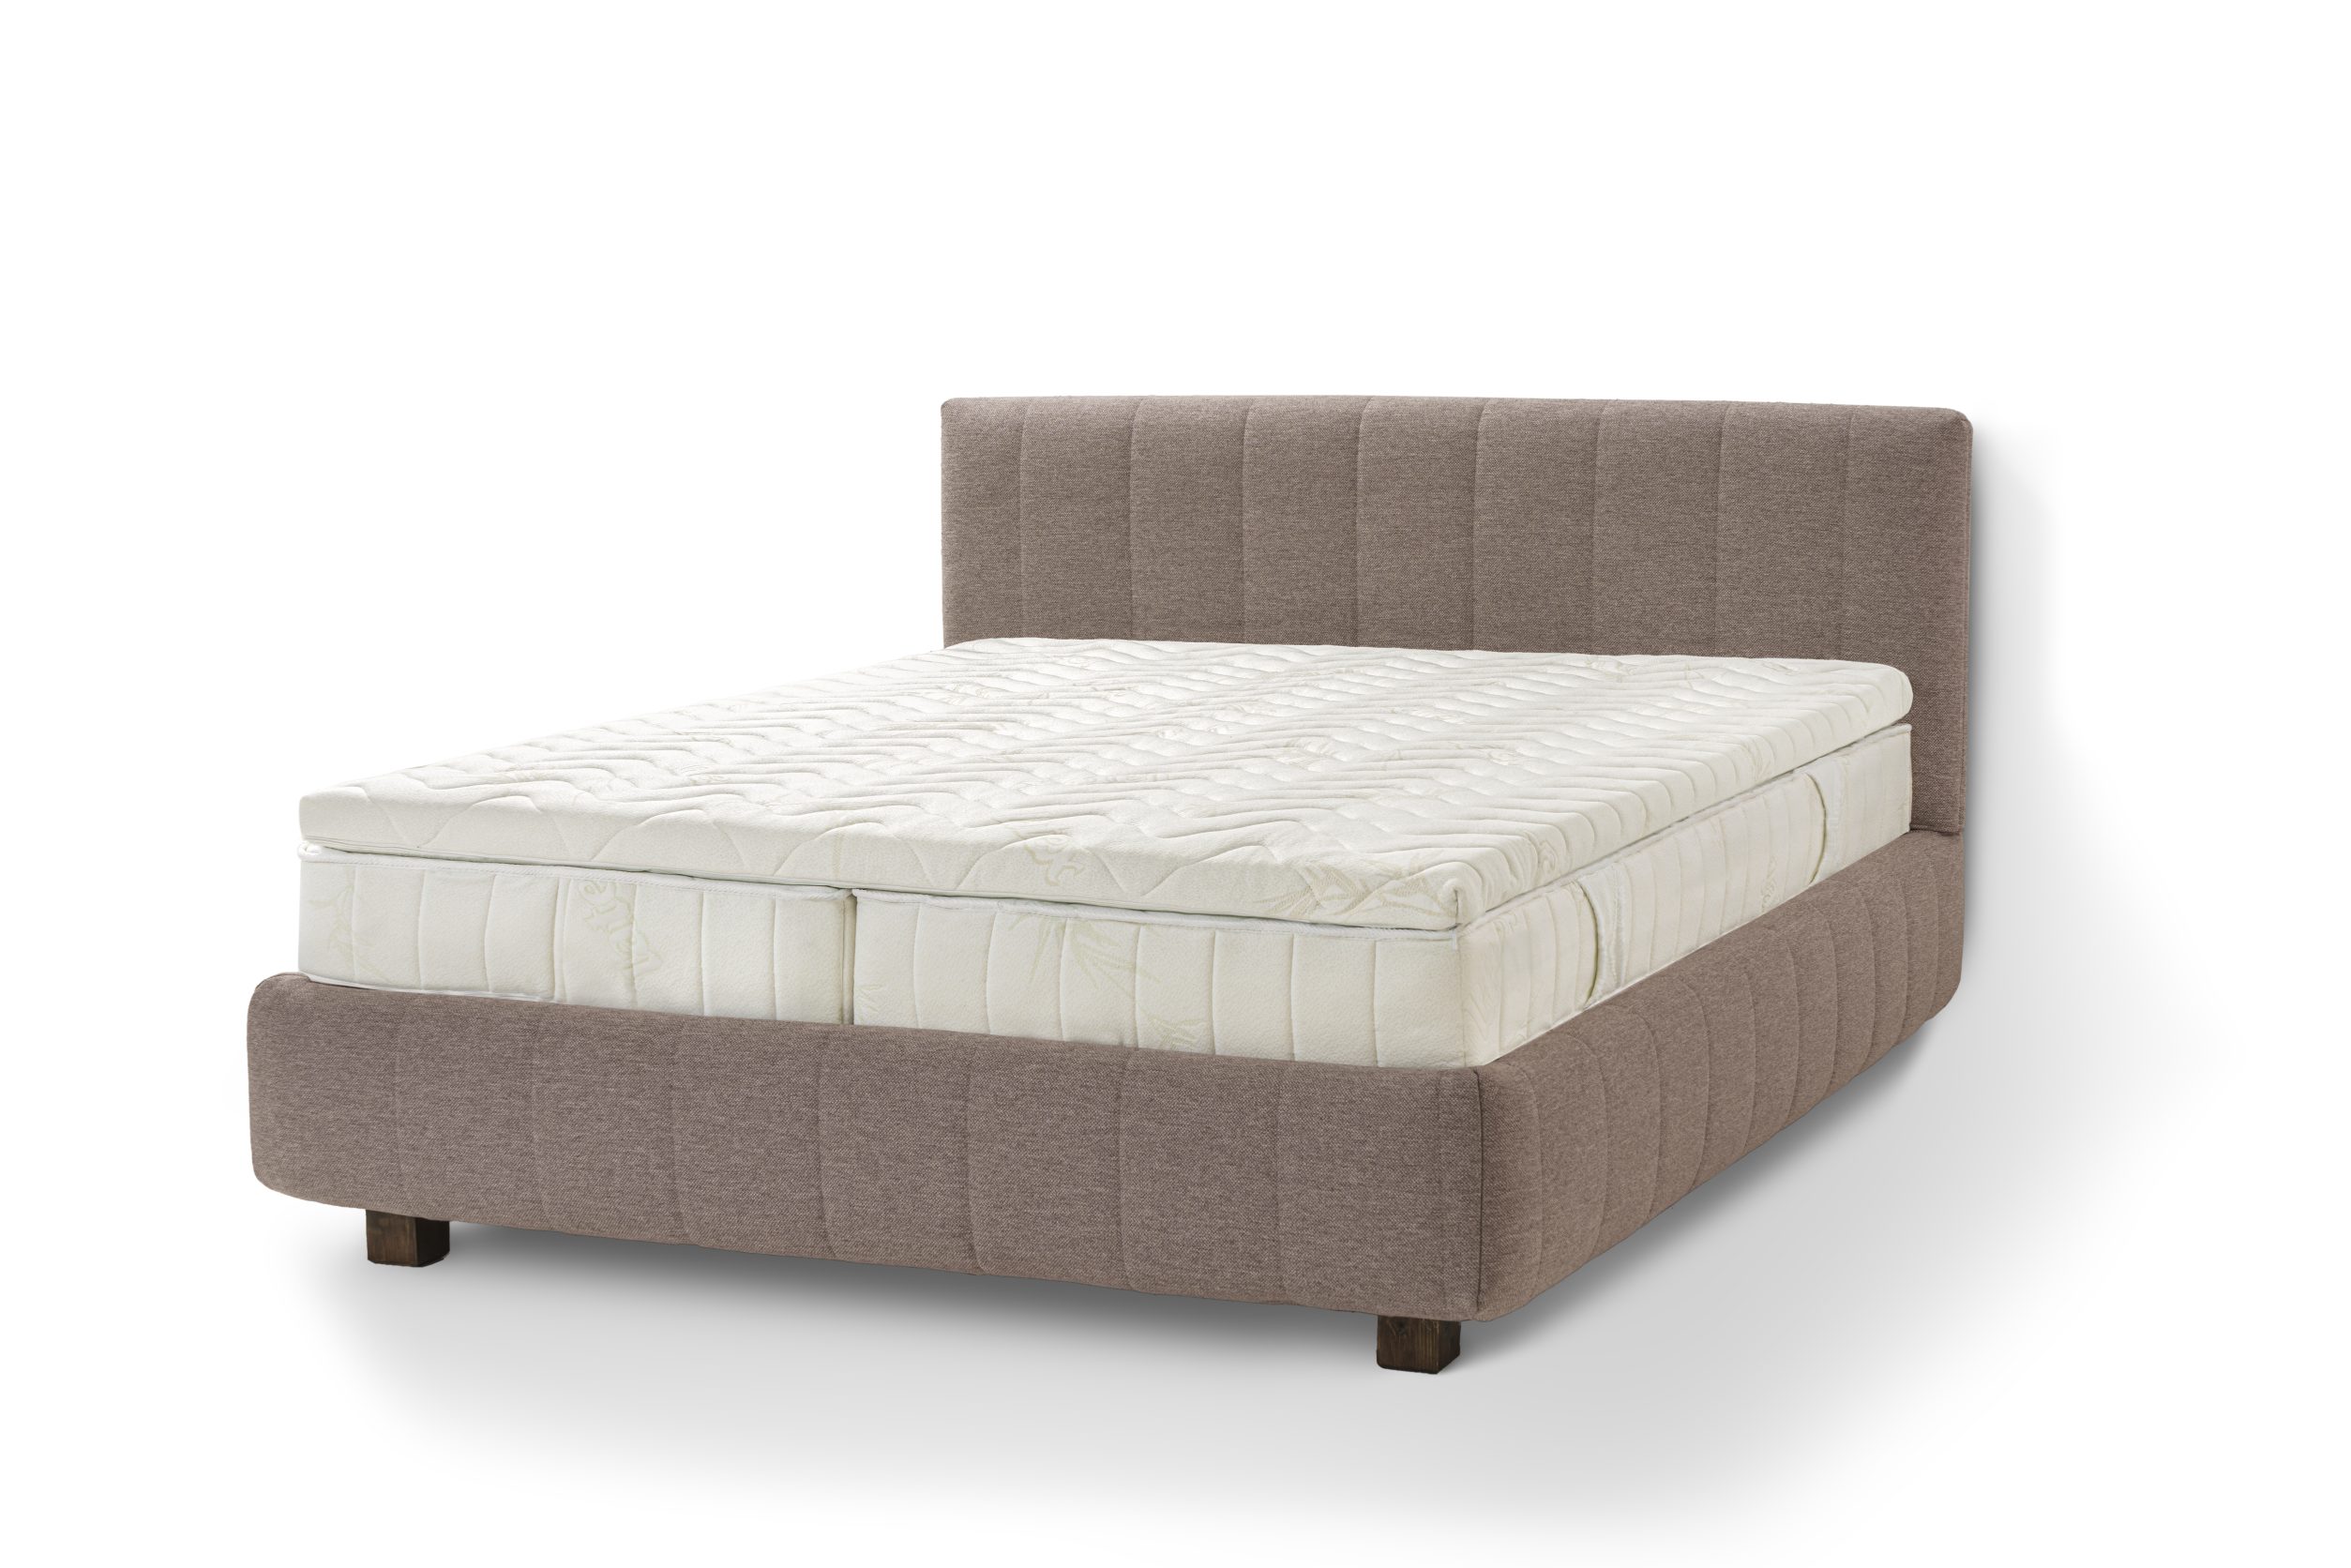 Letti Moderni Holzbett Bett Calma, hergestellt aus hochwertigem Massivholz Siena Brown | Jugendbetten